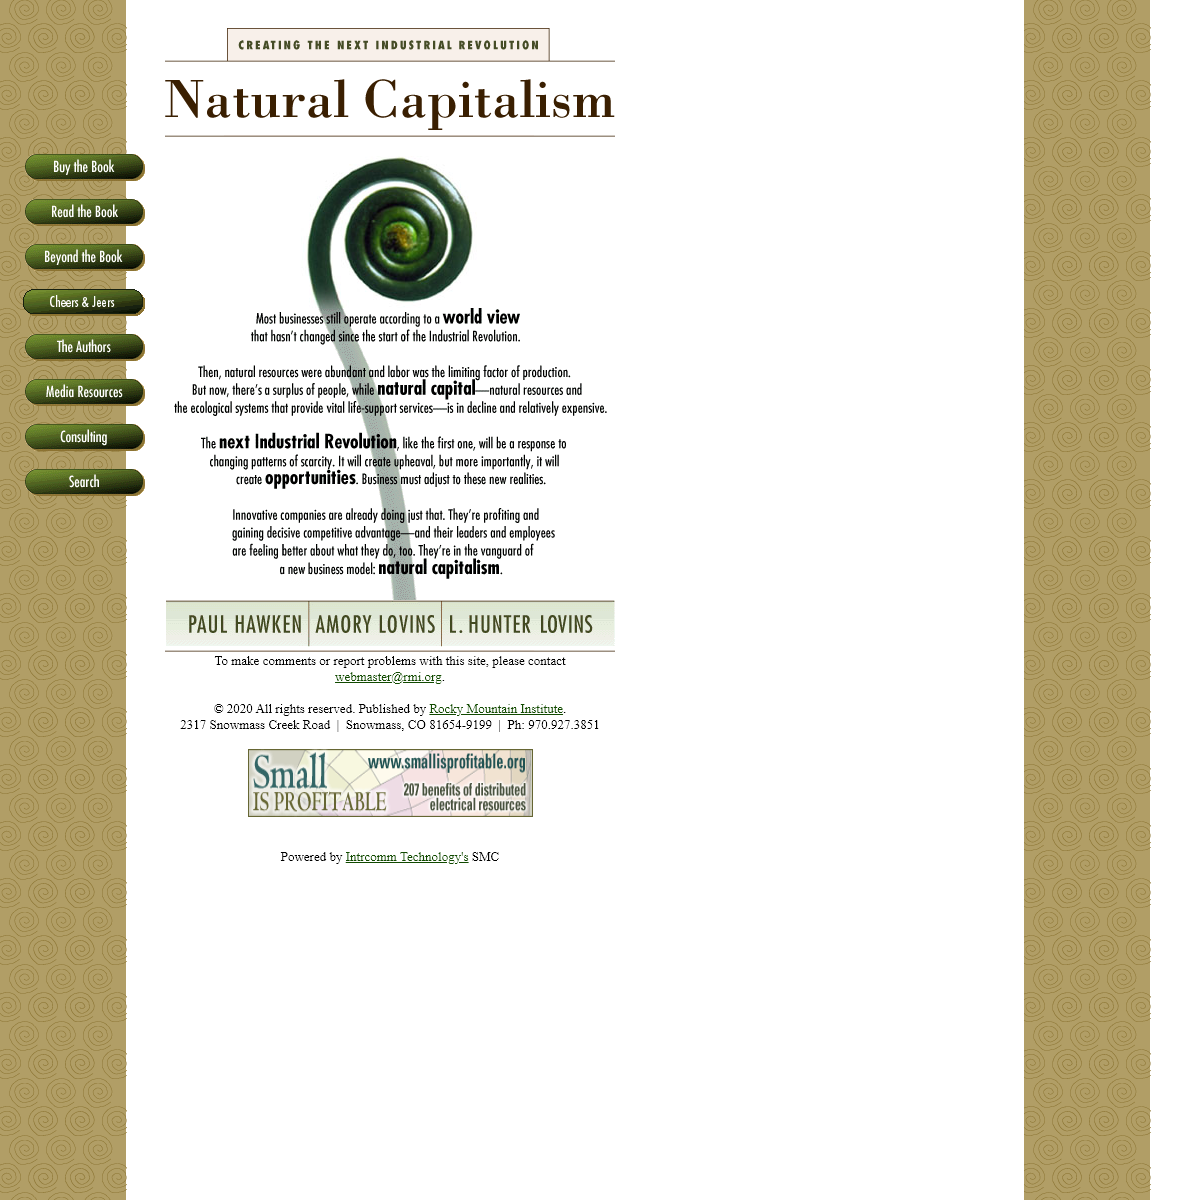 A complete backup of natcap.org